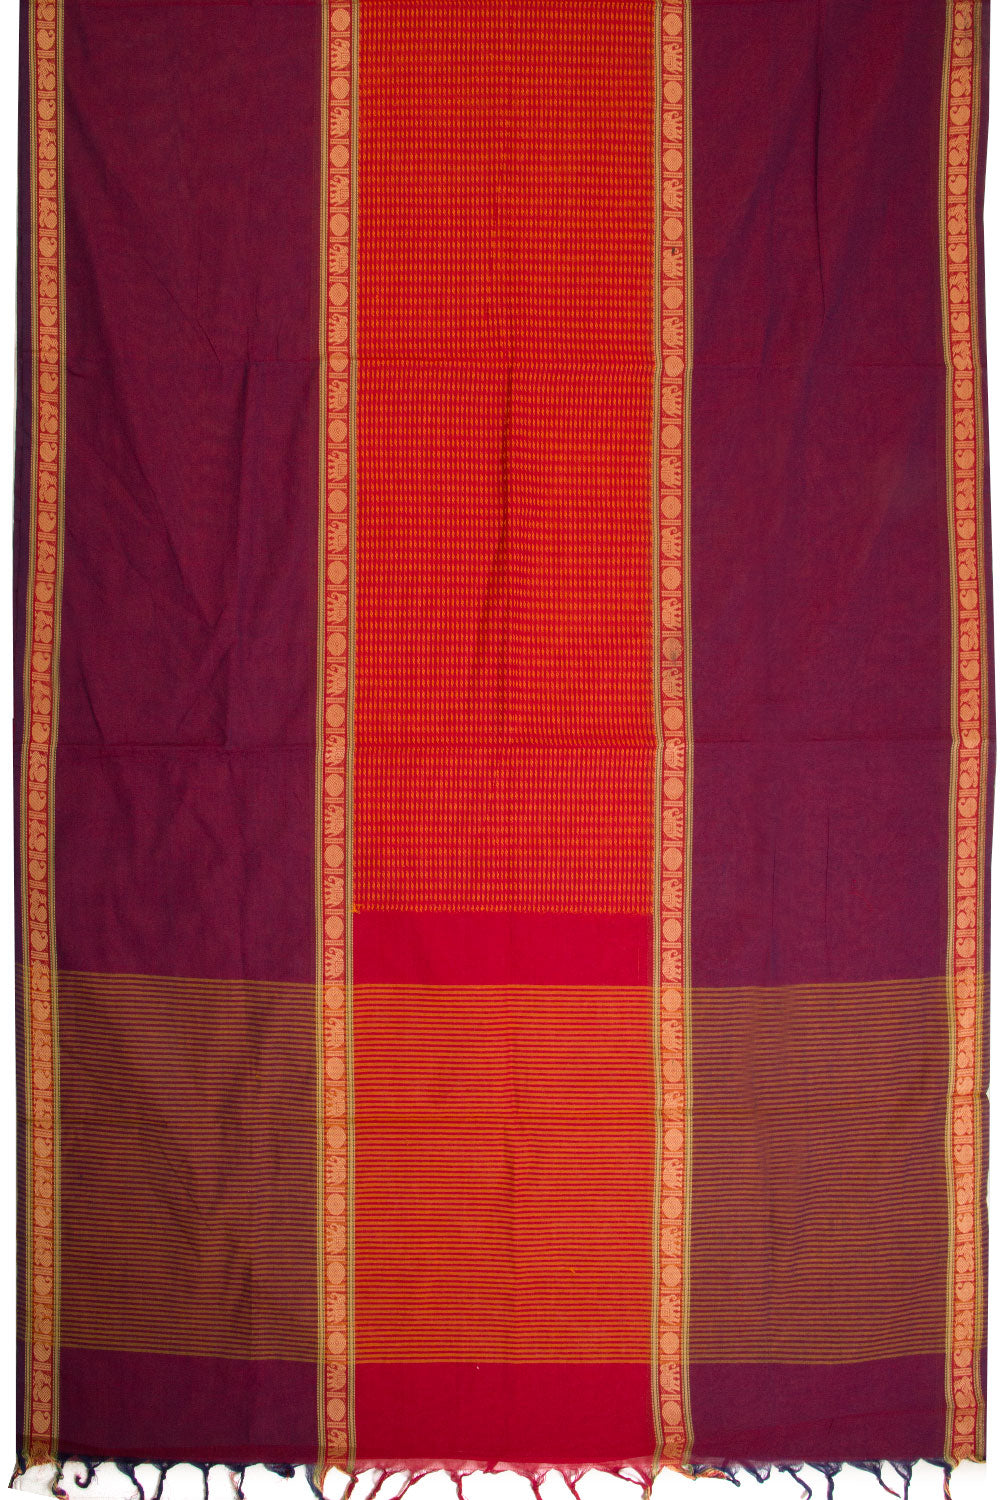 Maroon Handwoven Kanchi Cotton Saree 10068679 - Avishya